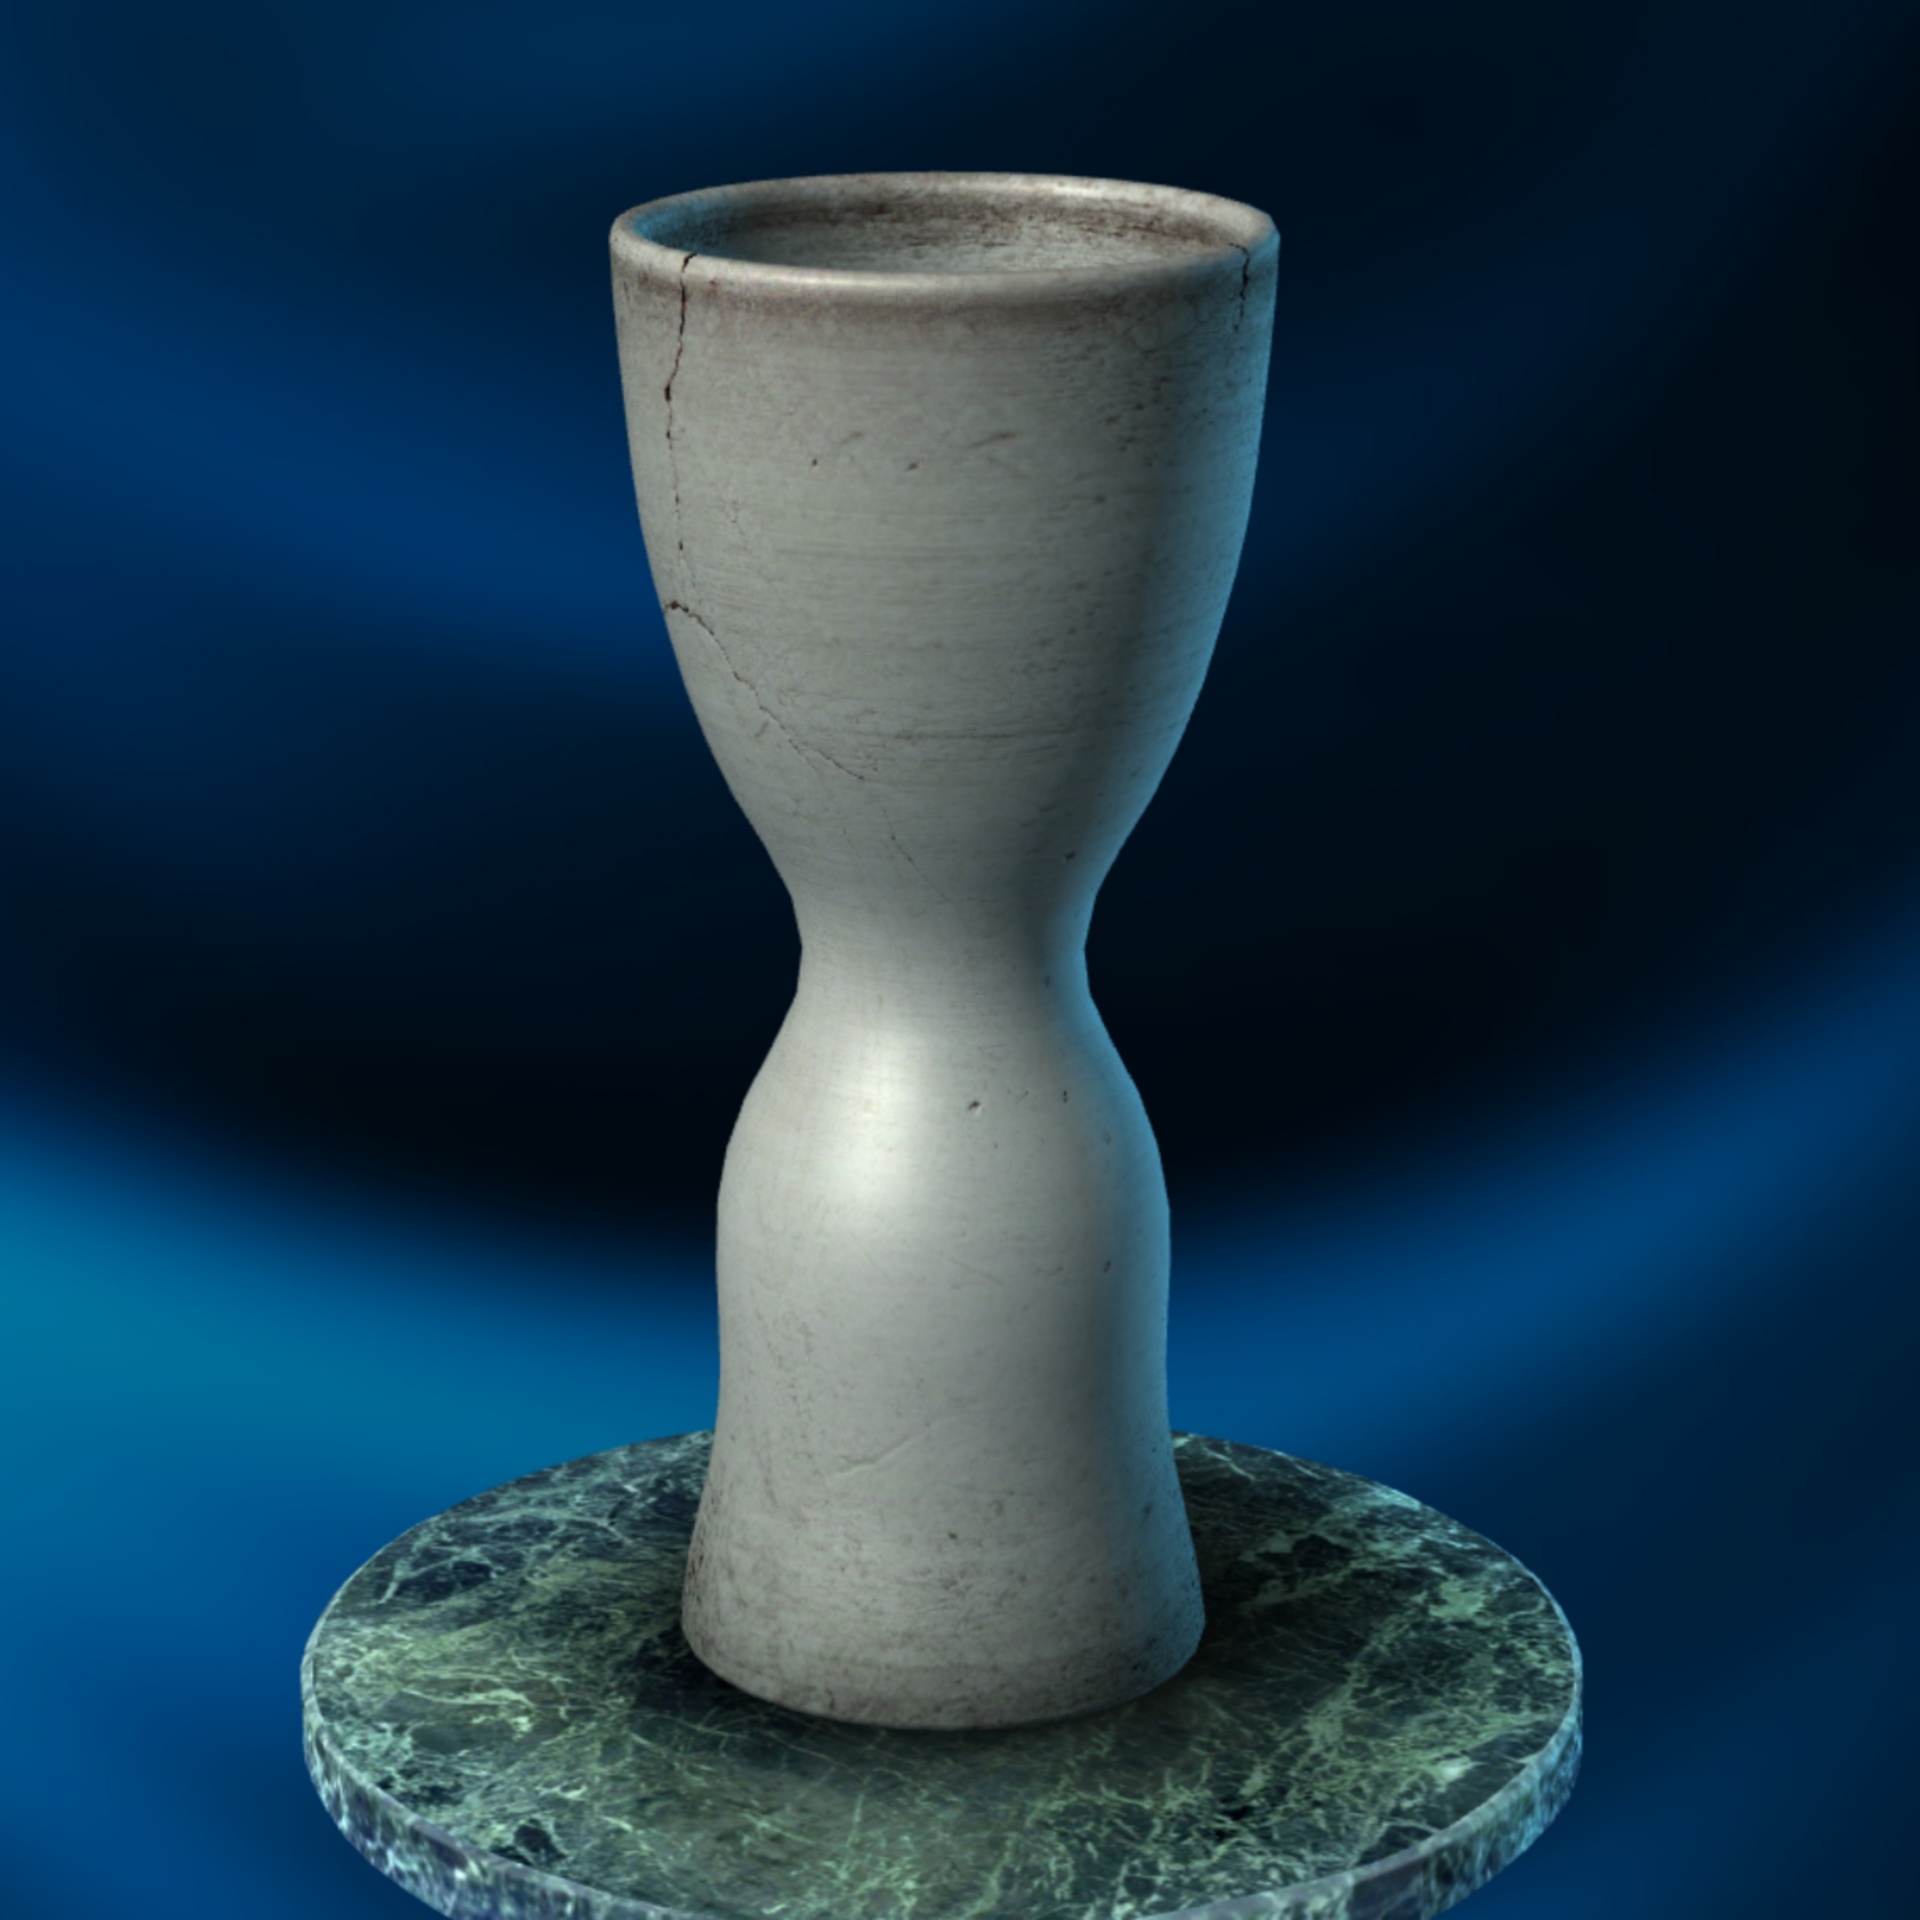 grey vase 3d free photo